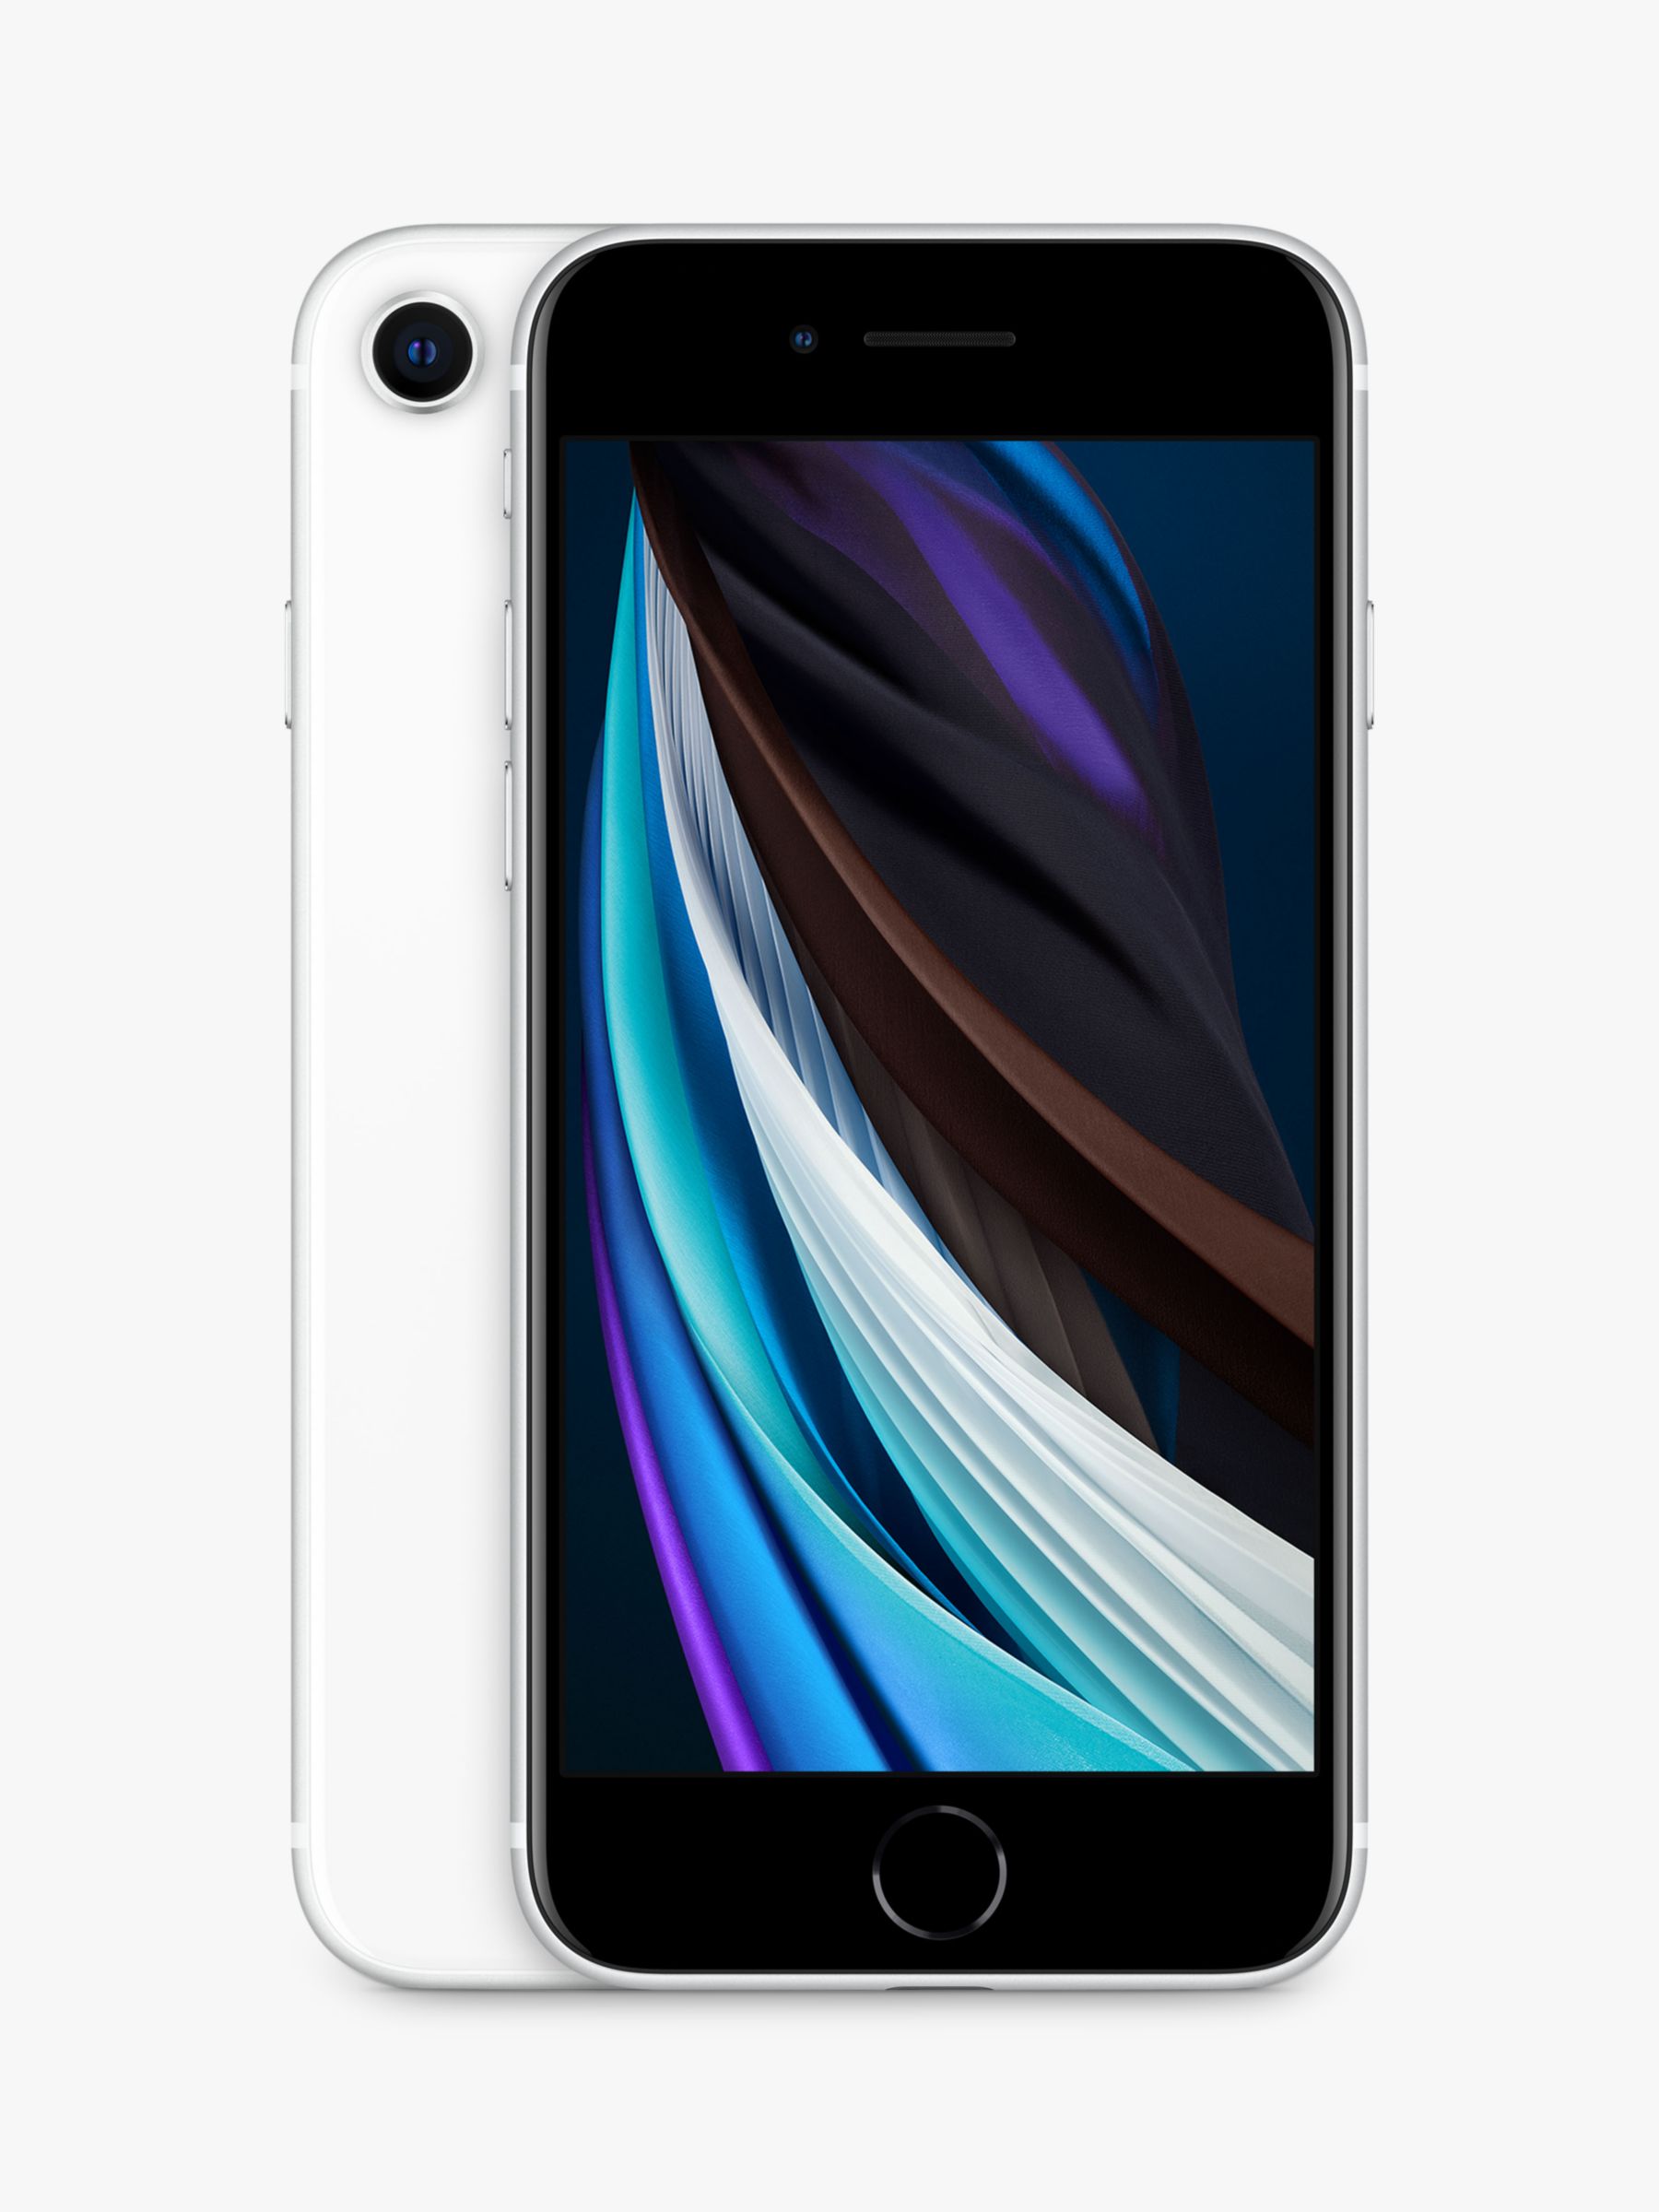 Apple iPhone SE, iOS 13, 4.7, 4G LTE, SIM Free, 128GB